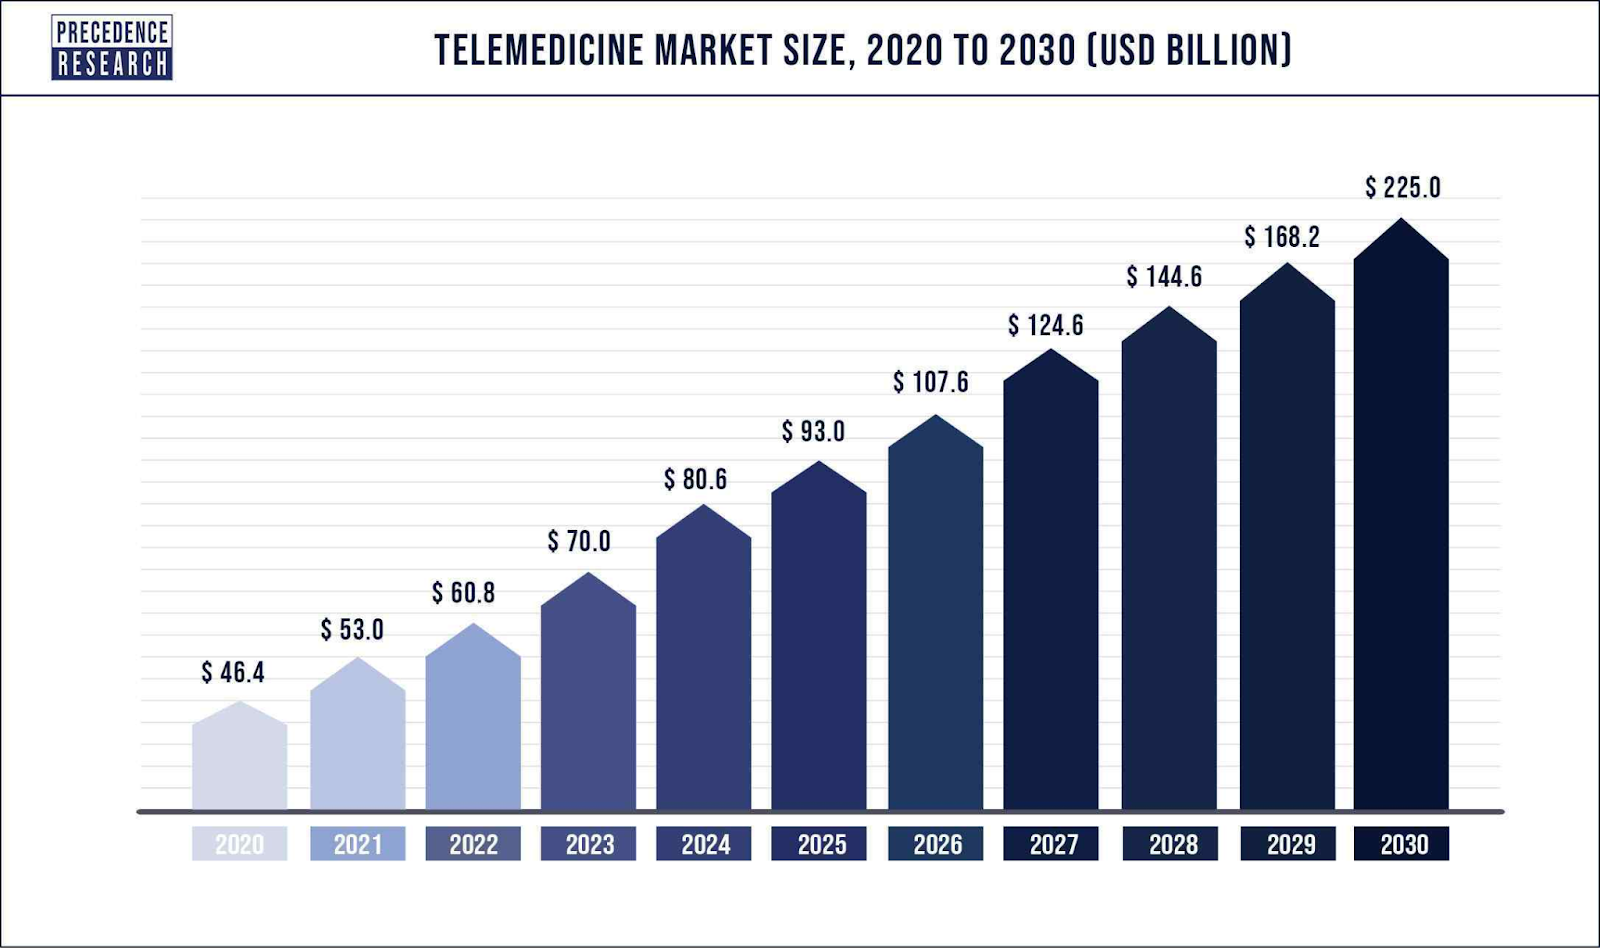 Telemedicine market size